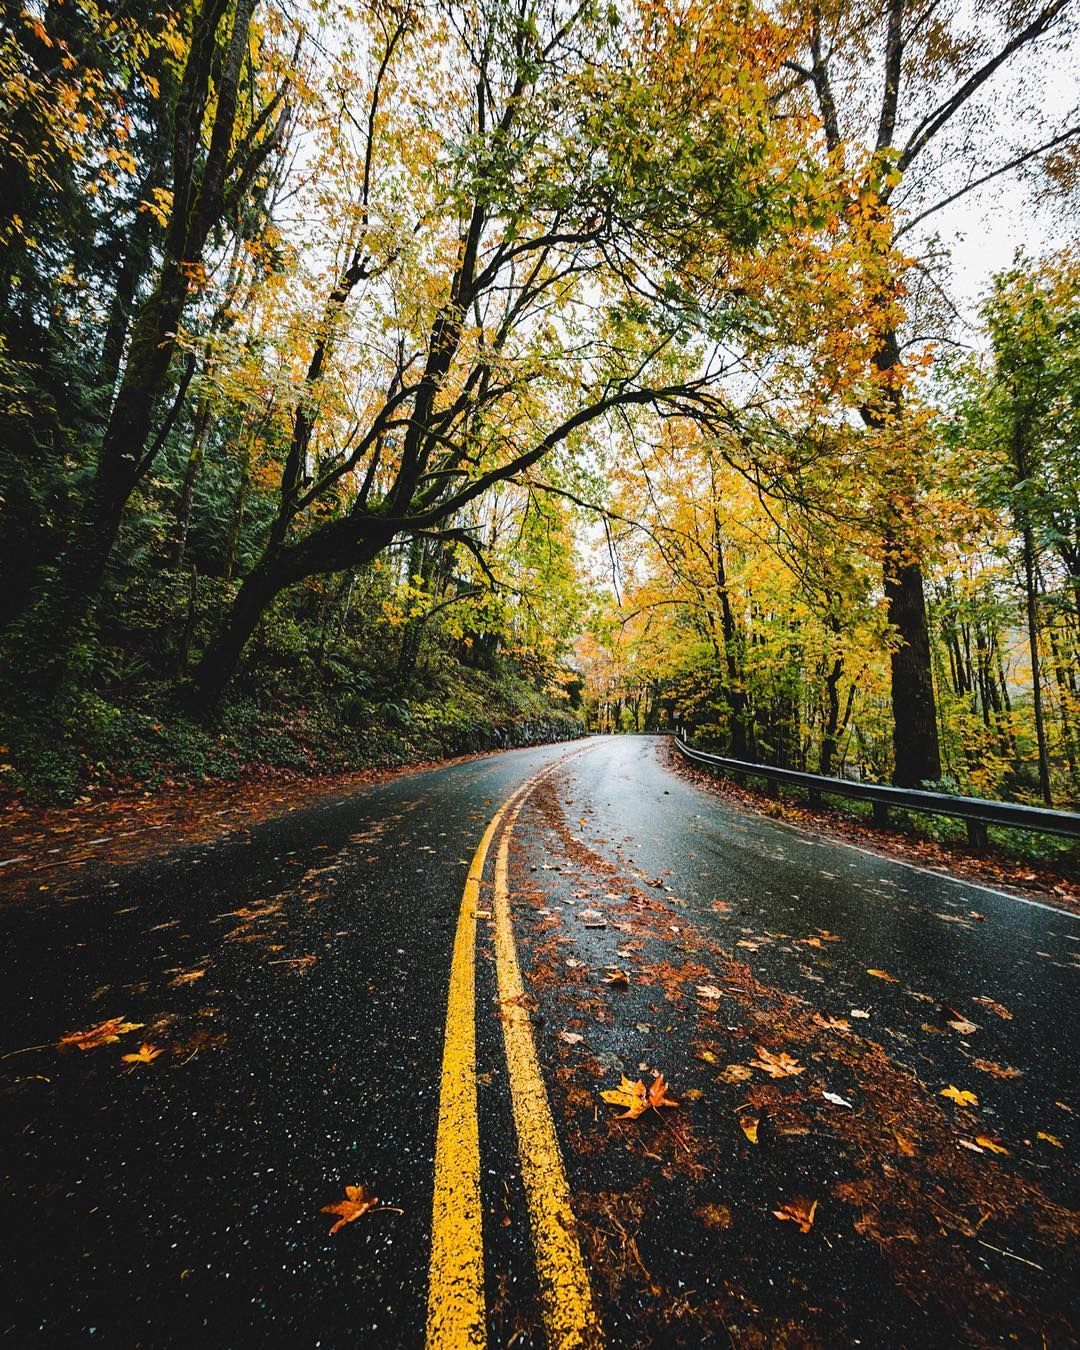 Rainy Autumn Road (Seattle, Washington) by seattle on Instagram